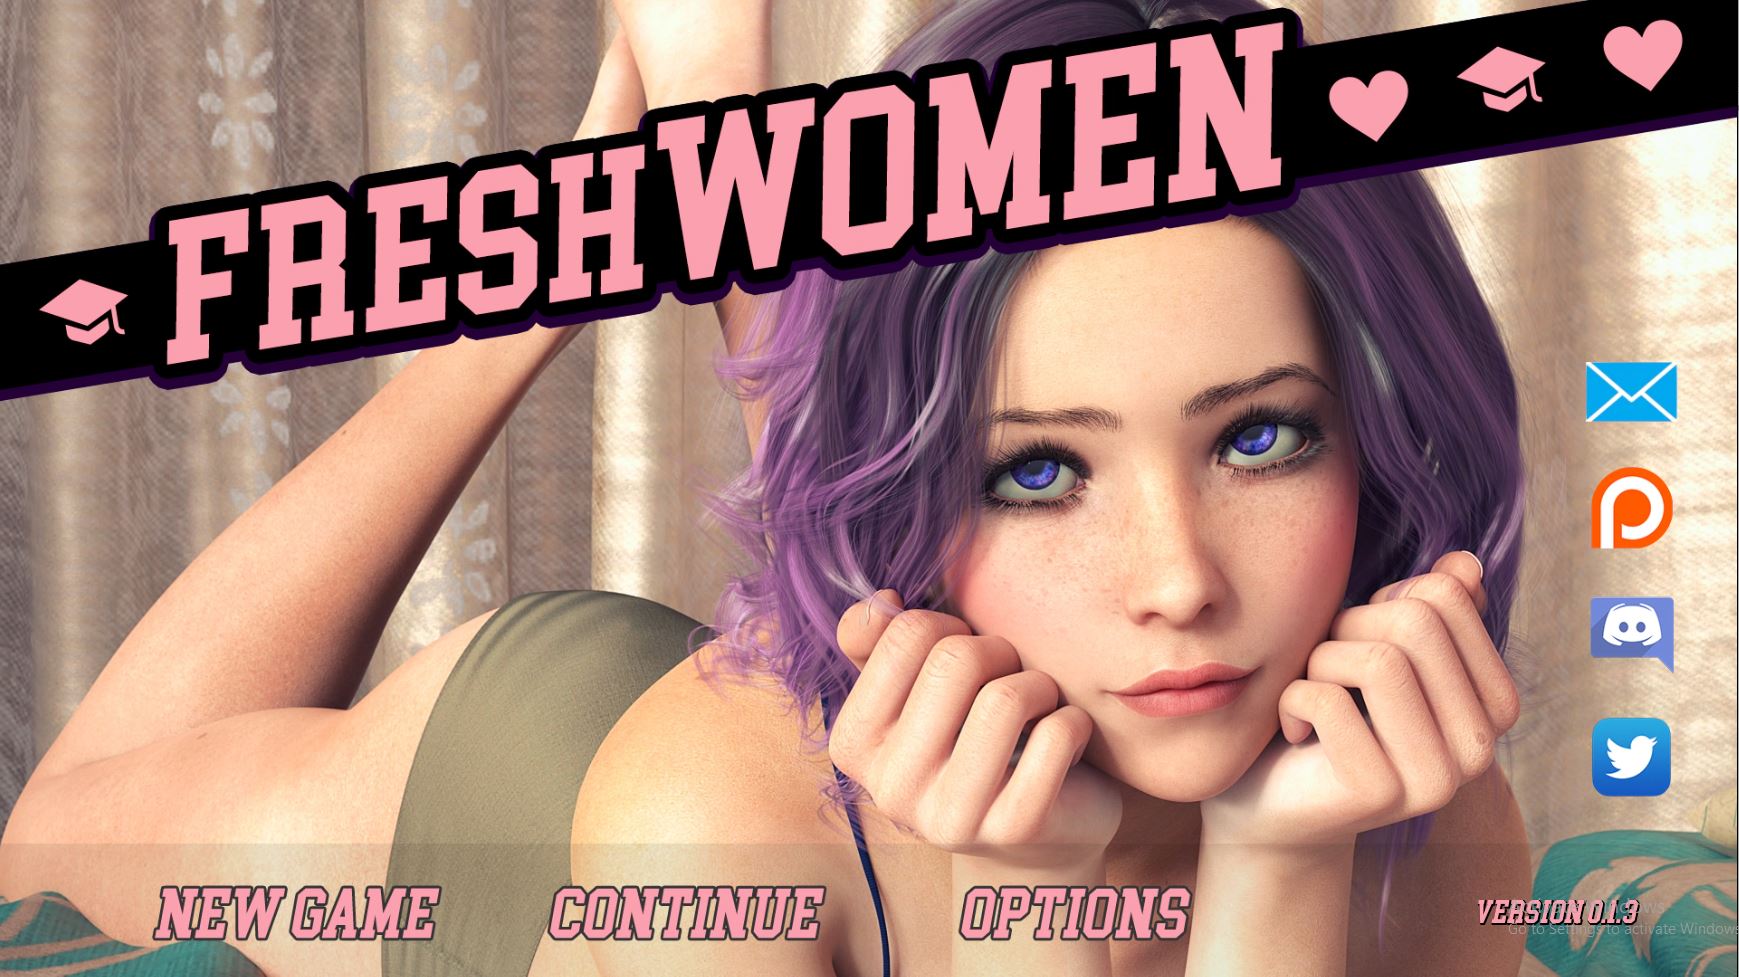 Adultgamesworld Free Porn Games and Sex Games » FreshWomen – New Season 2